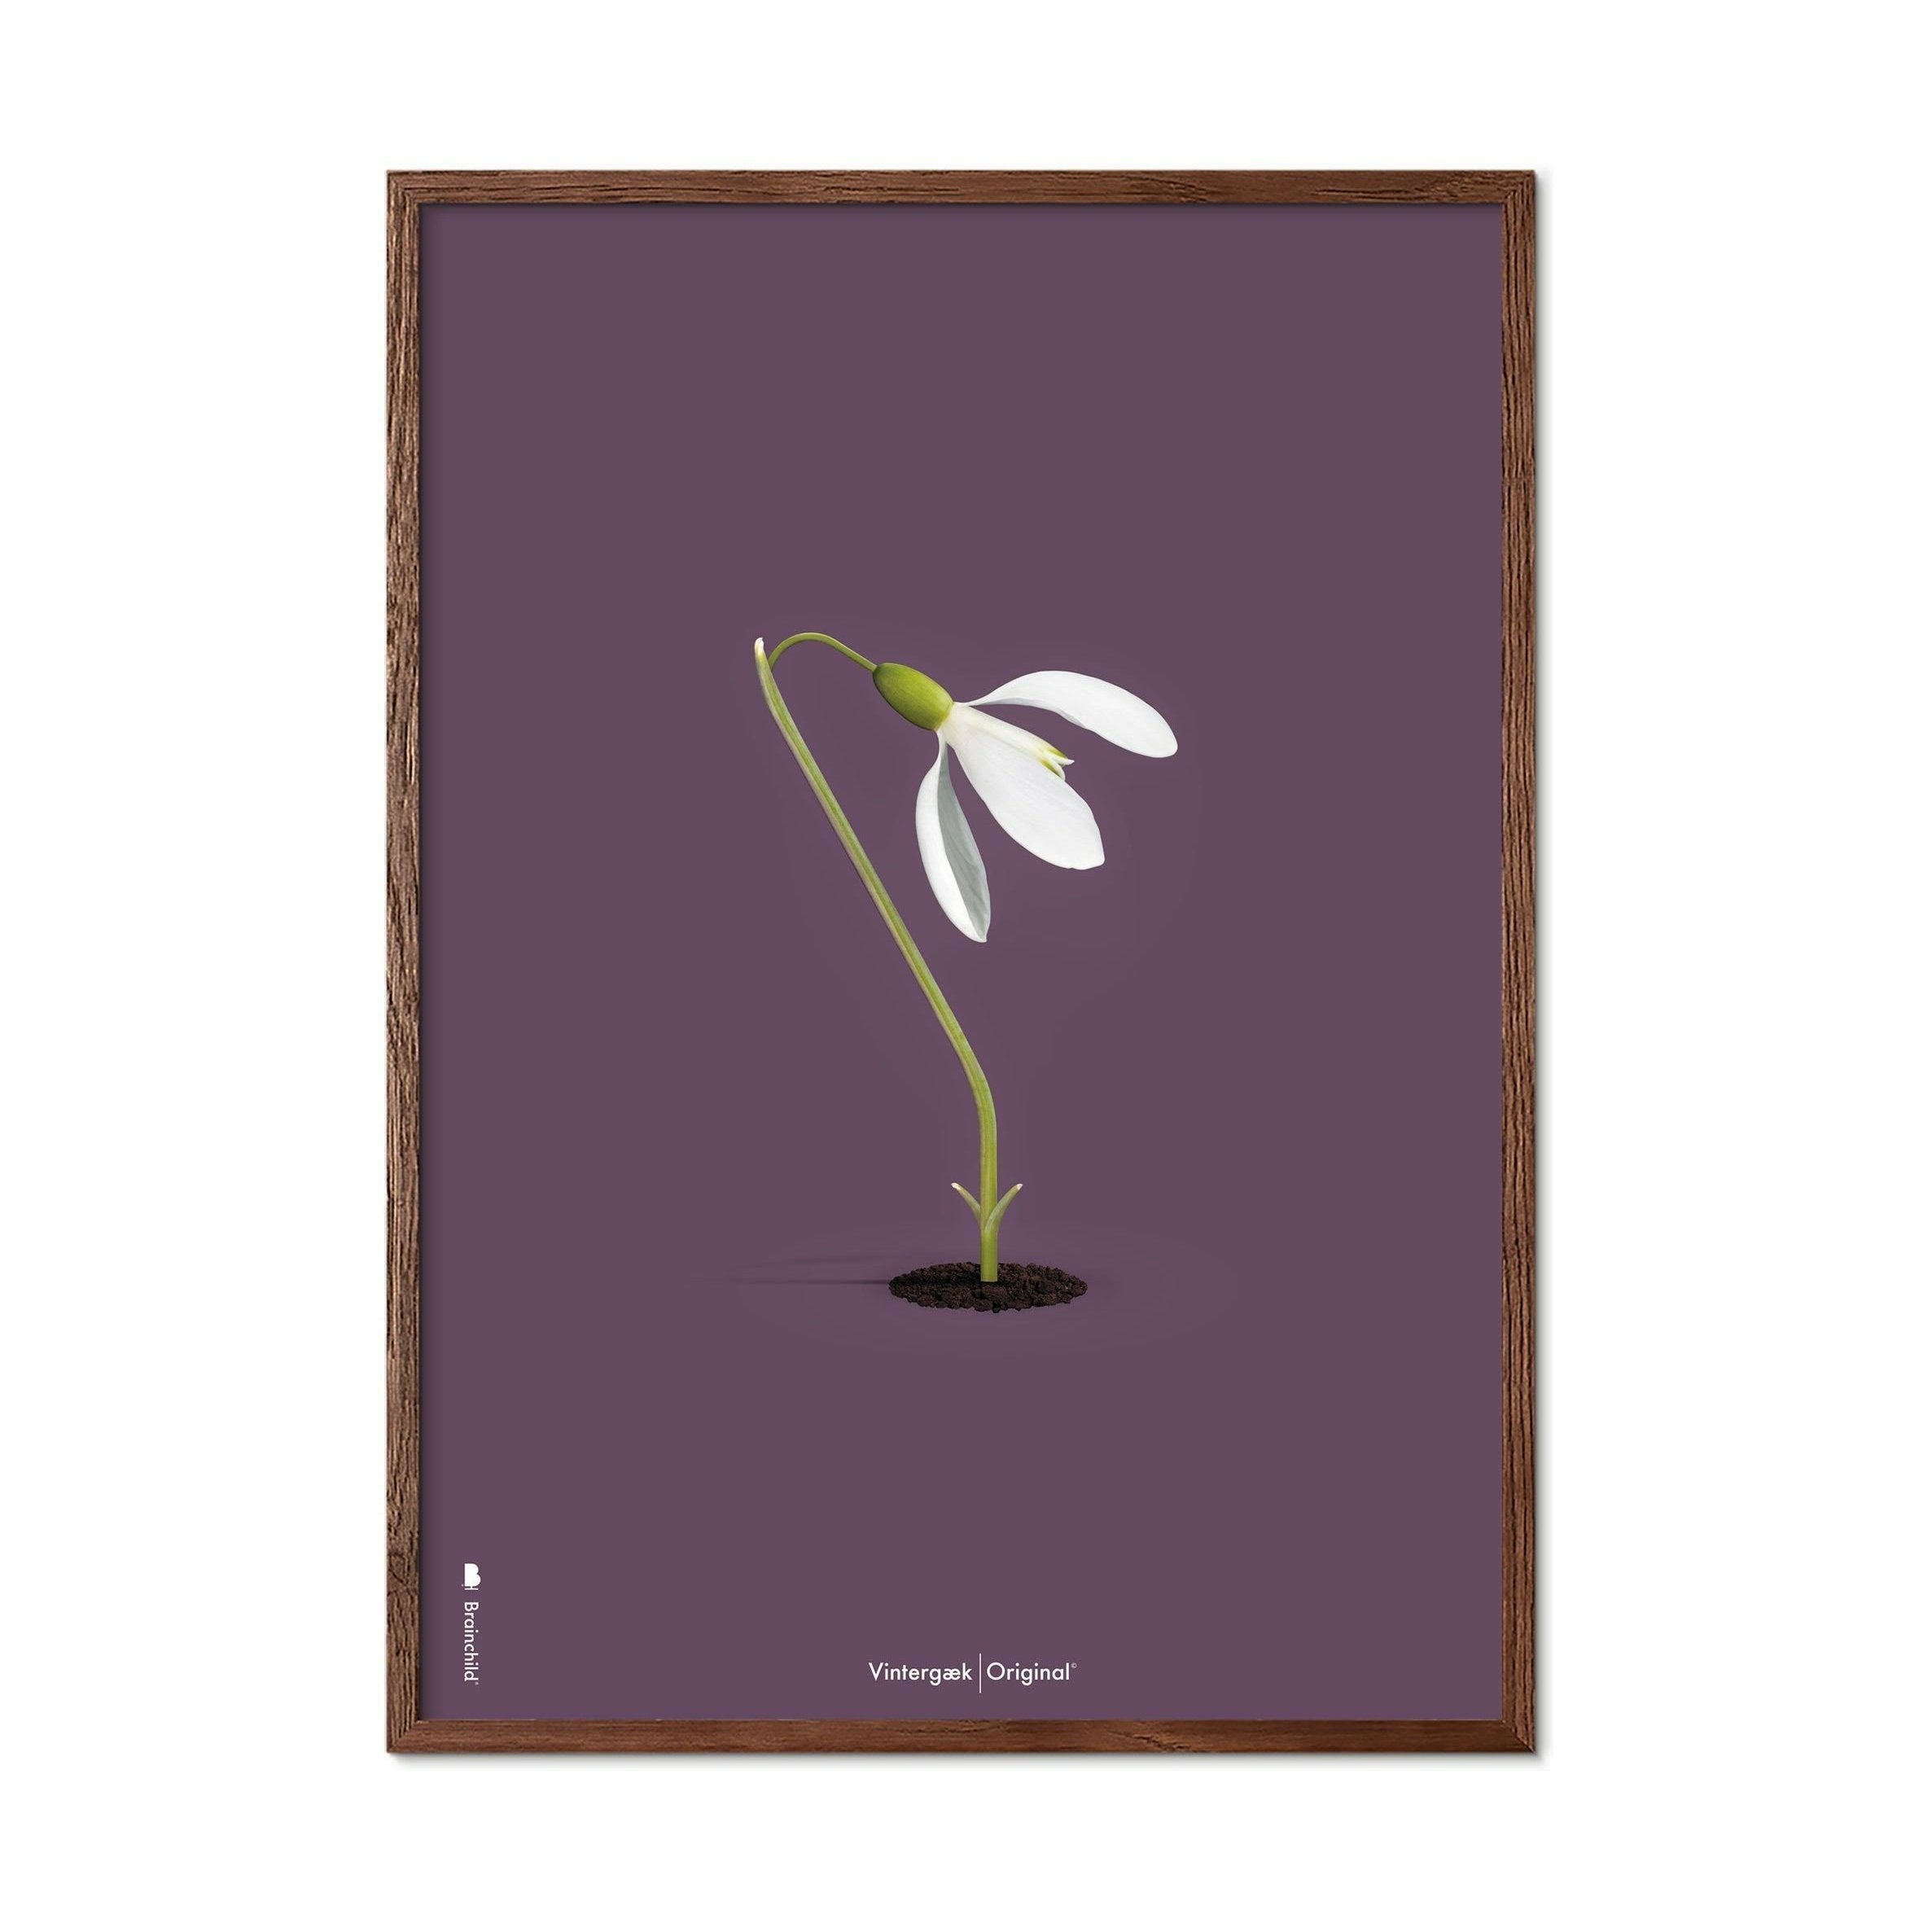 Brainchild Snowdrop Classic Poster, Frame Made Of Dark Wood 30x40 Cm, Purple Background